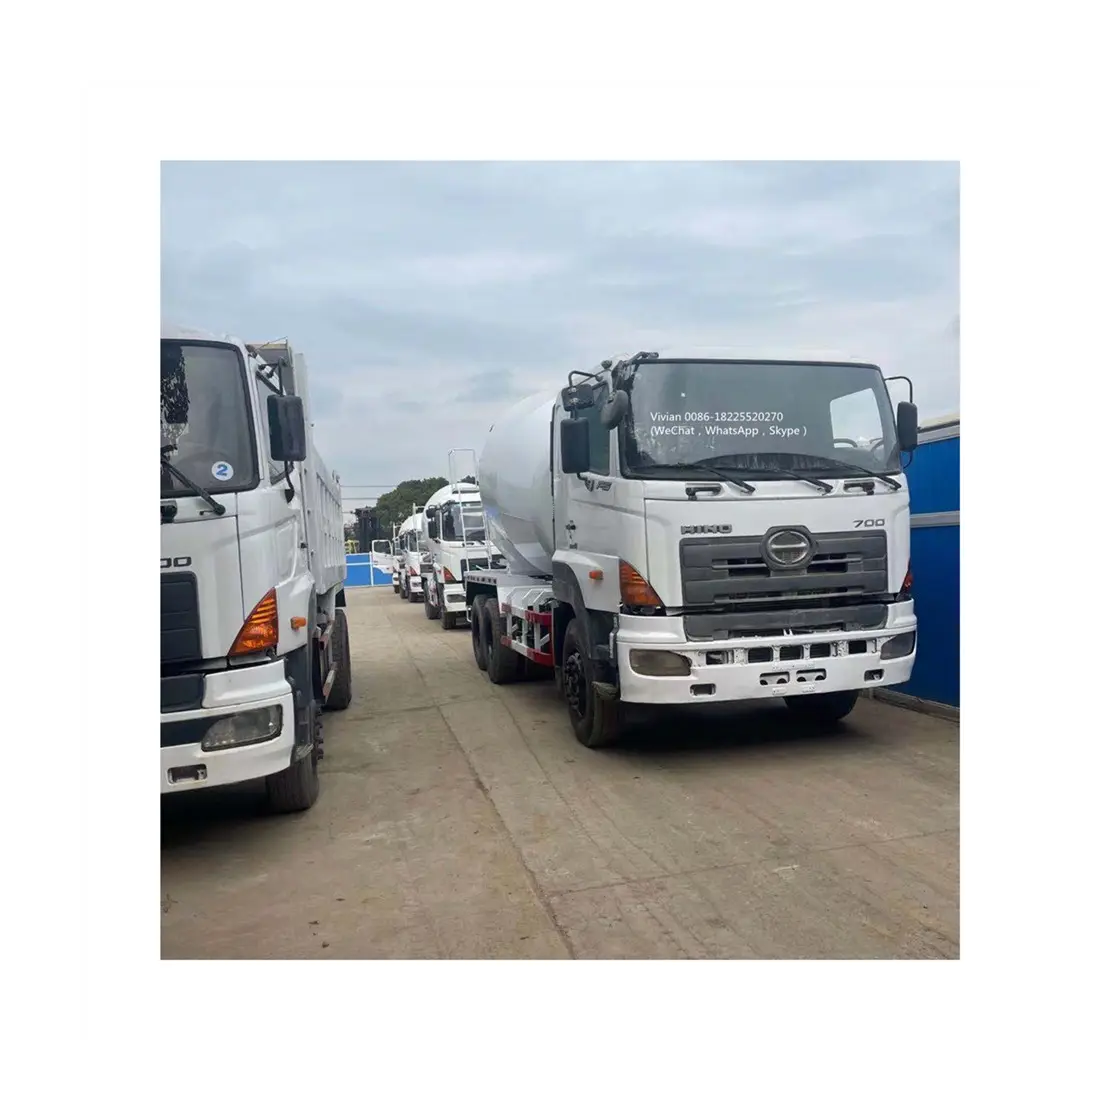 İkinci el Hino 700 beton harç kamyonu ikinci el makine düşük fiyat